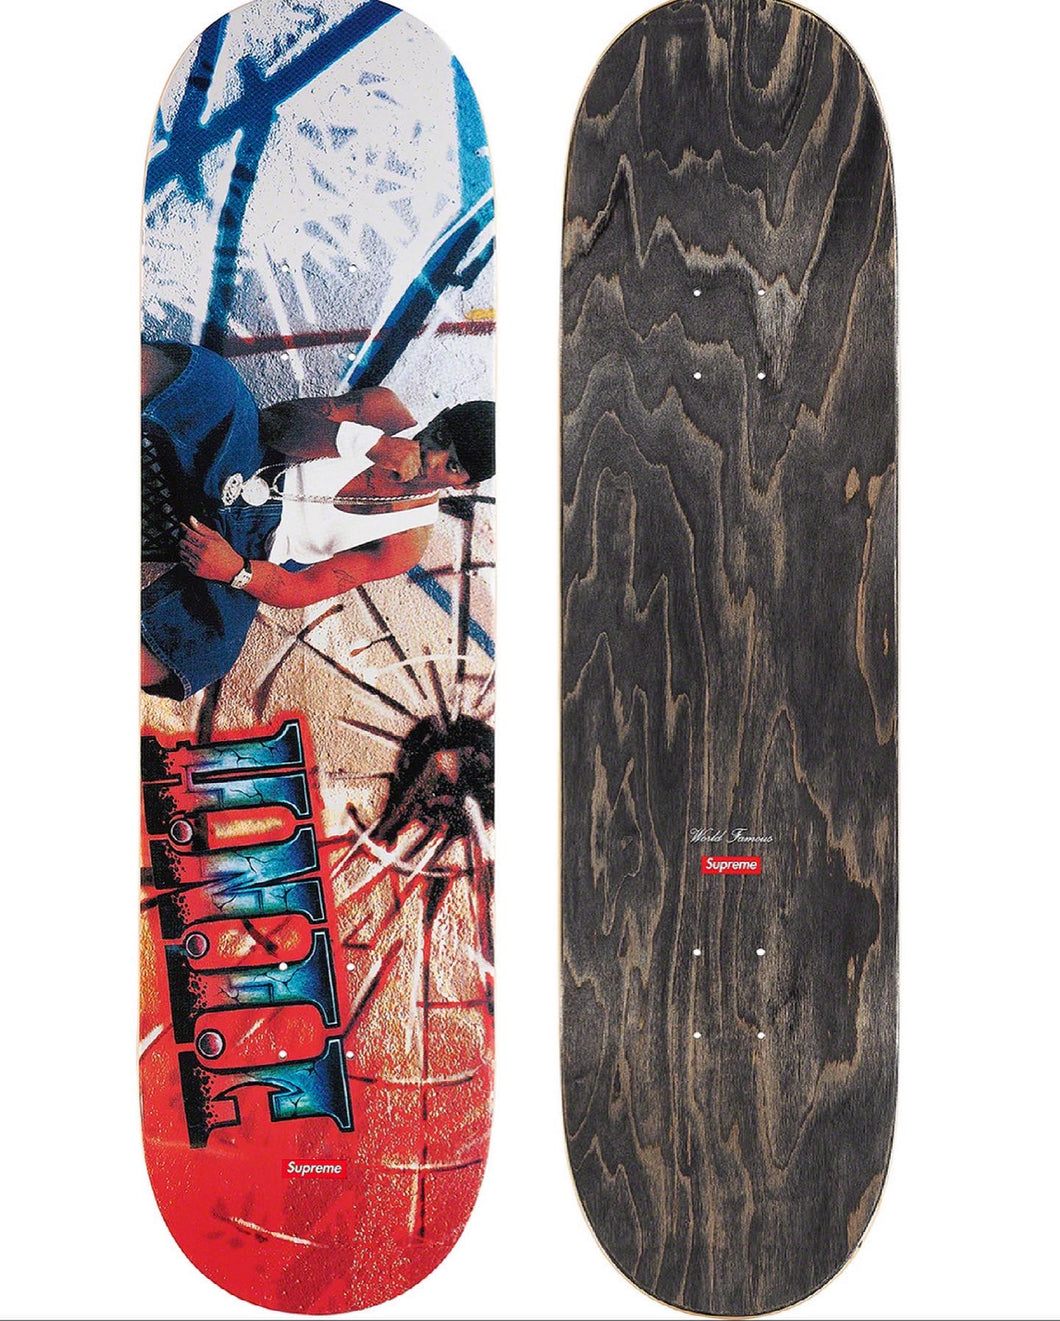 Supreme “HNIC” skateboard deck